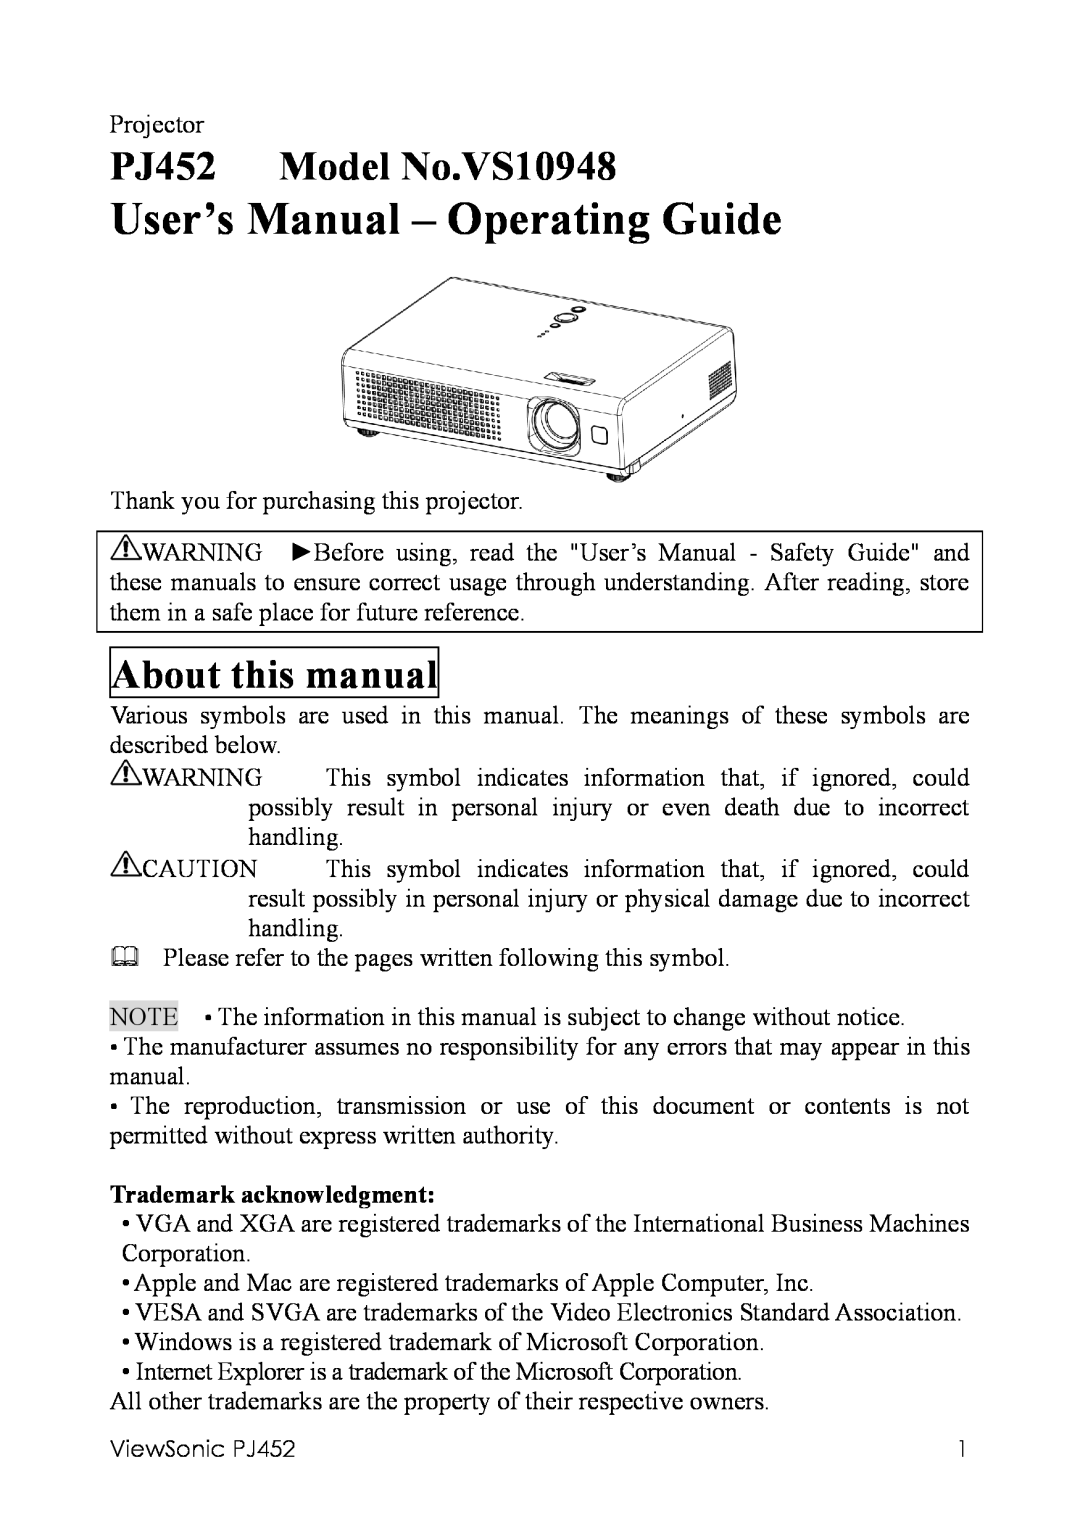 ViewSonic PJ452 Model No.VS10948, About this manual 